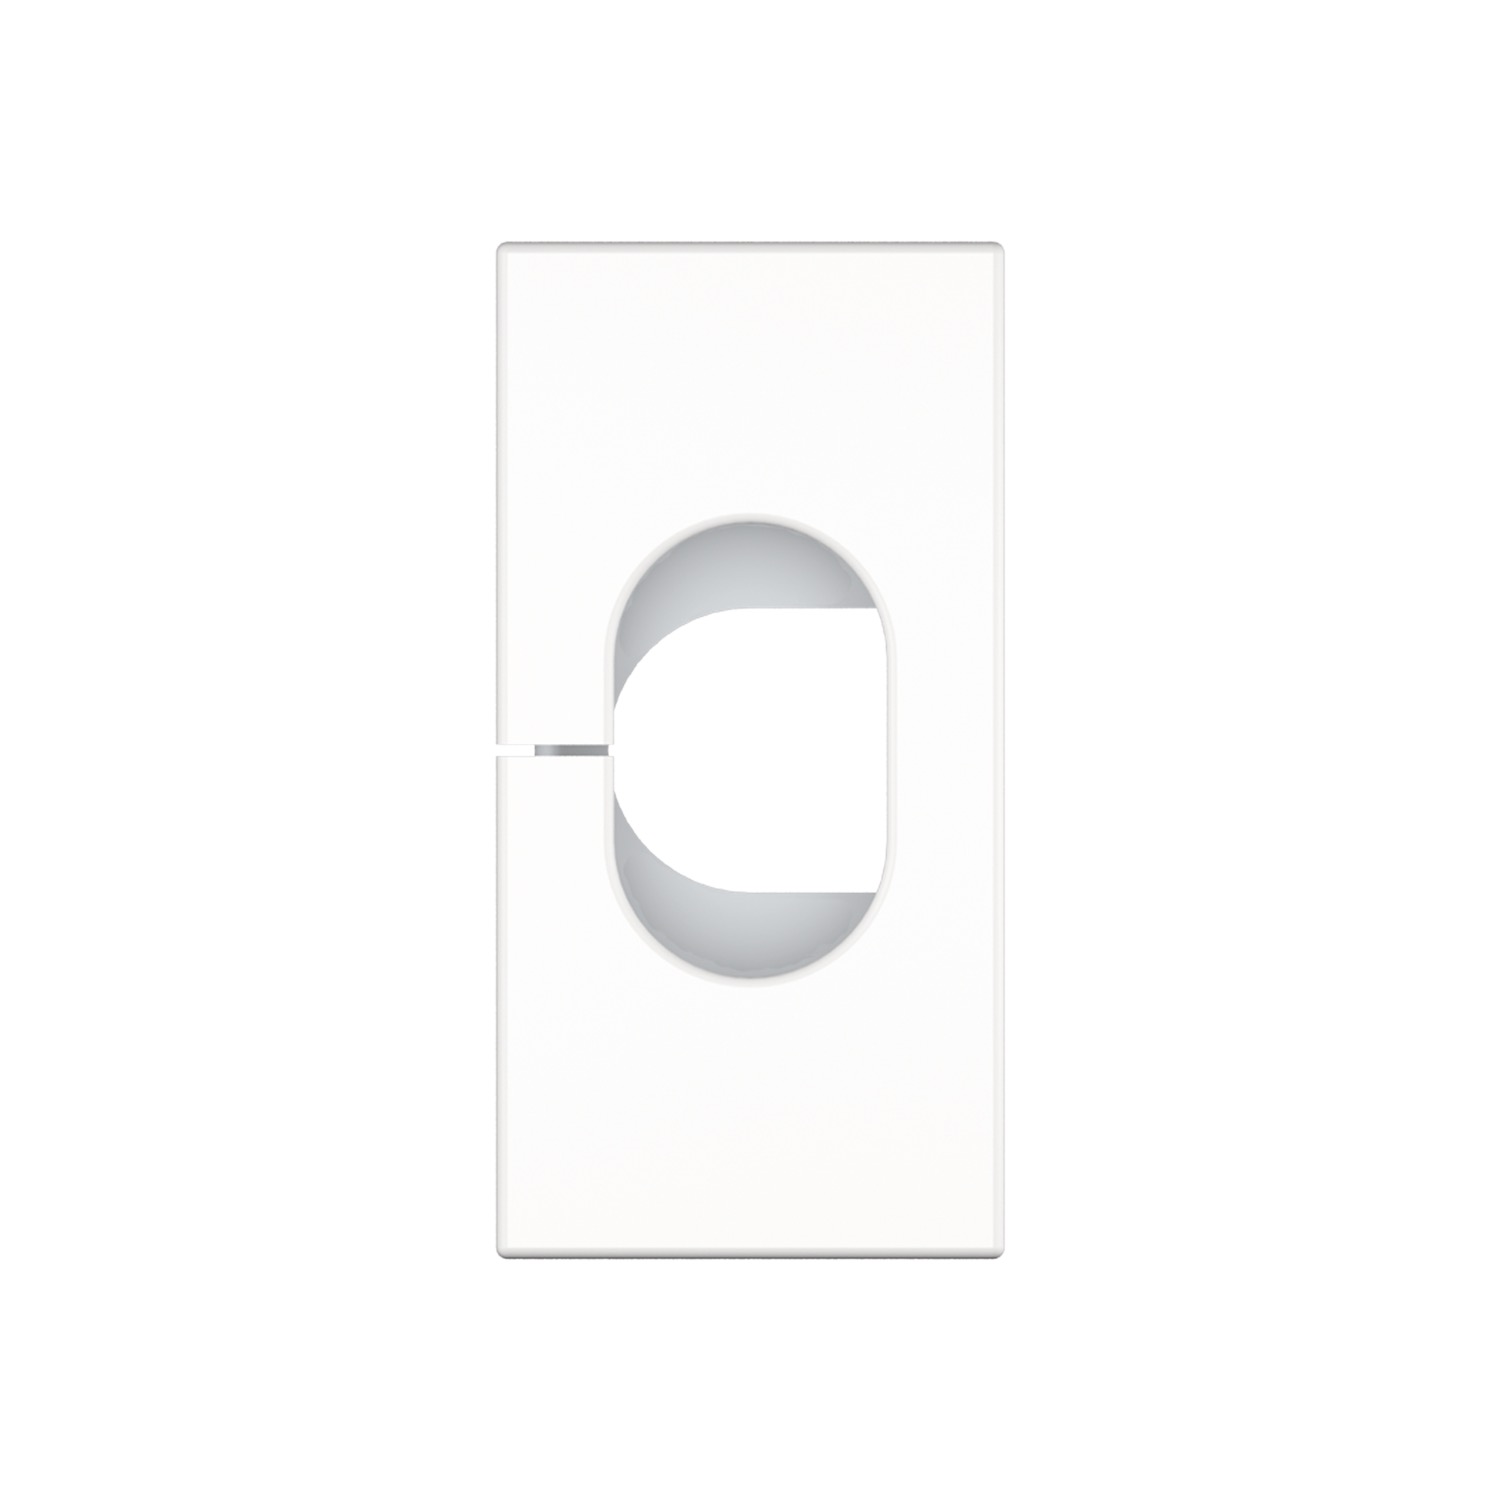 Kindermann Konnect flex 45 click blind panel - cable aperture 12 mm - half panel - white